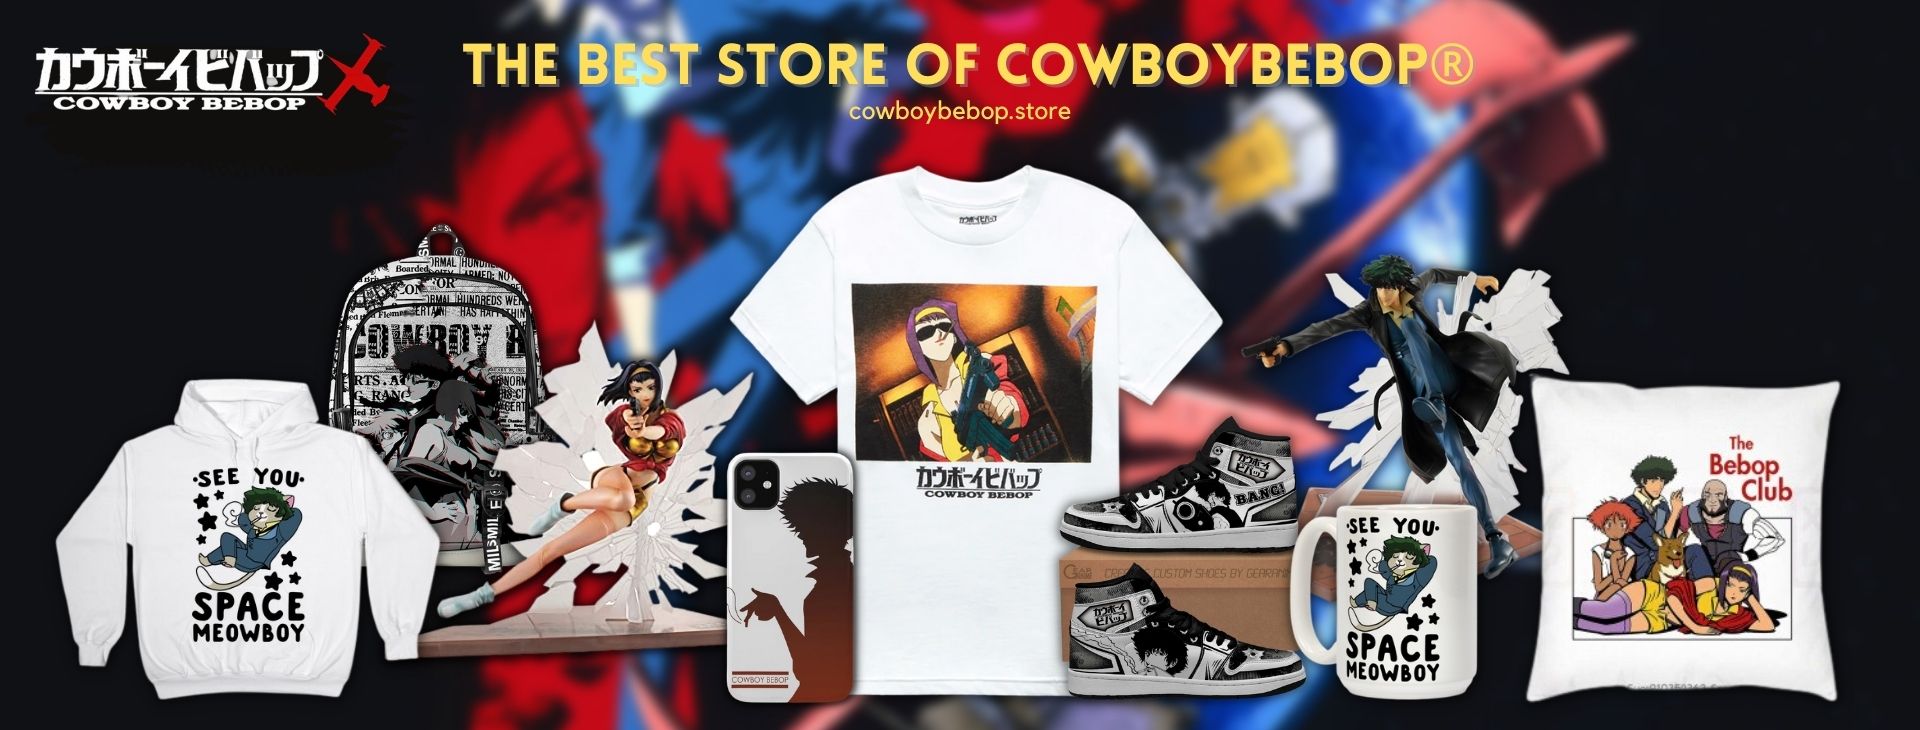 cowboy bebop Store Banner - Cowboy Bebop Store